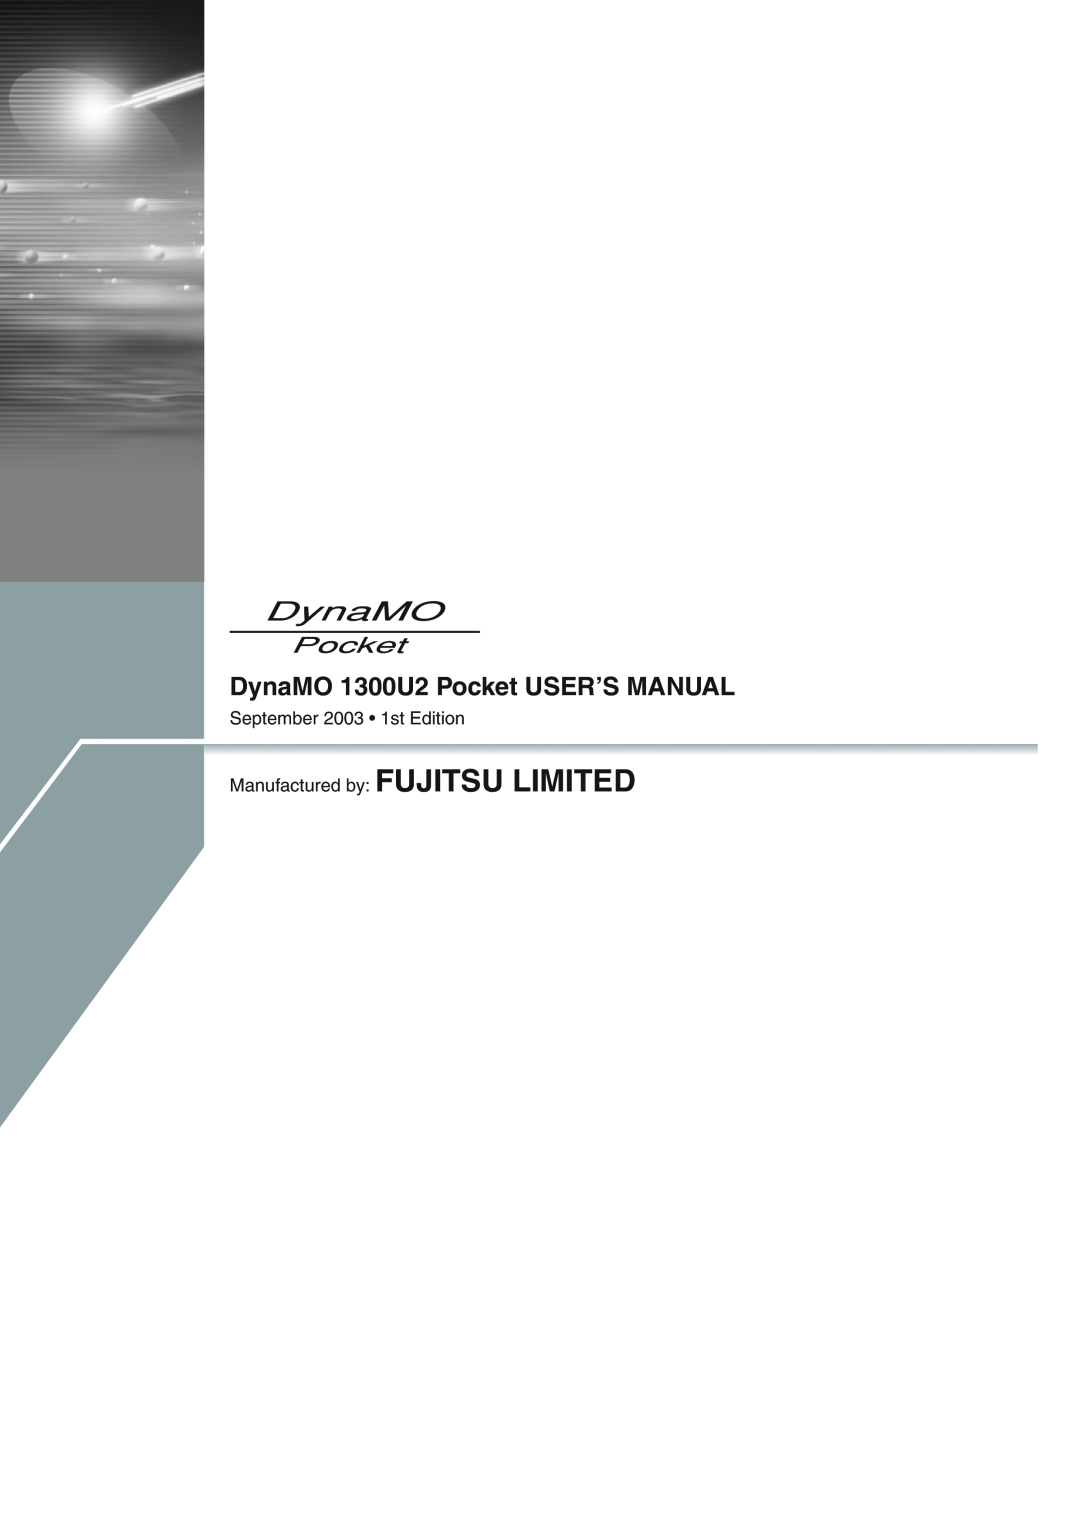 Fujitsu user manual DynaMO 1300U2 Pocket USER’S MANUAL, September 2003 1st Edition Manufactured by FUJITSU LIMITED 